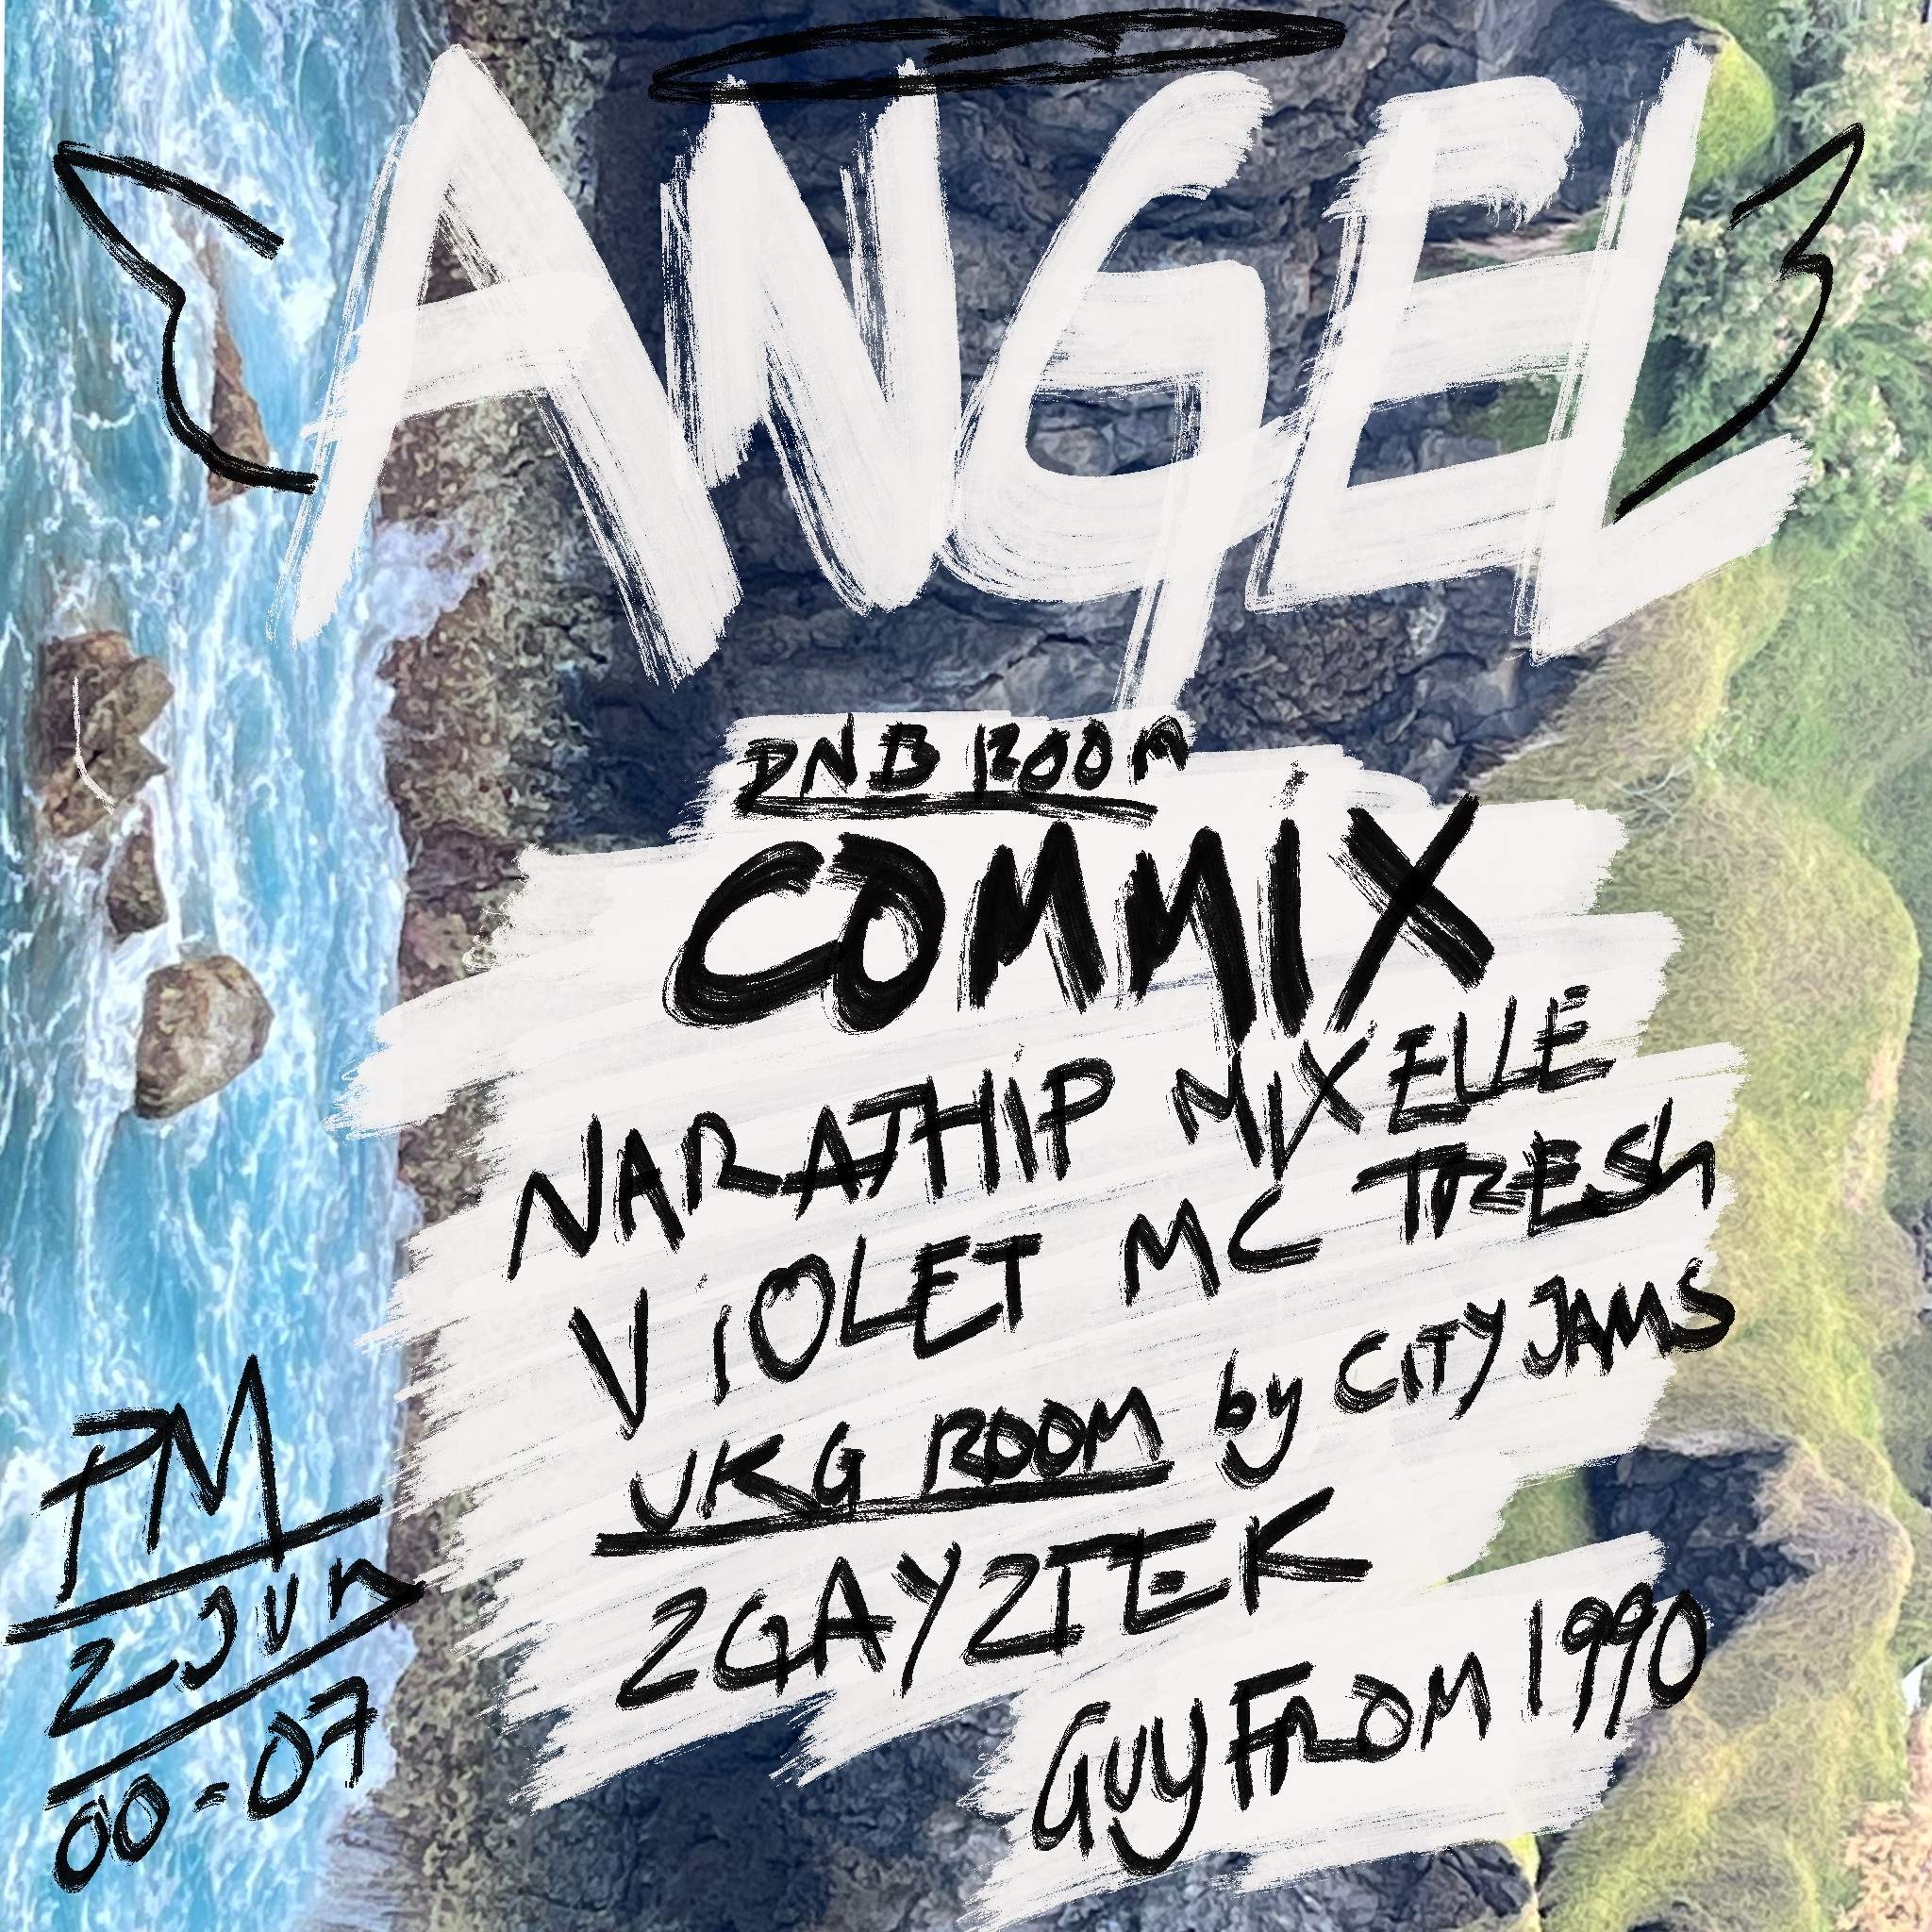 ANGEL with Commix, Narathip, Mix'Elle, Violet, MC Tresh & City Jamz - フライヤー表